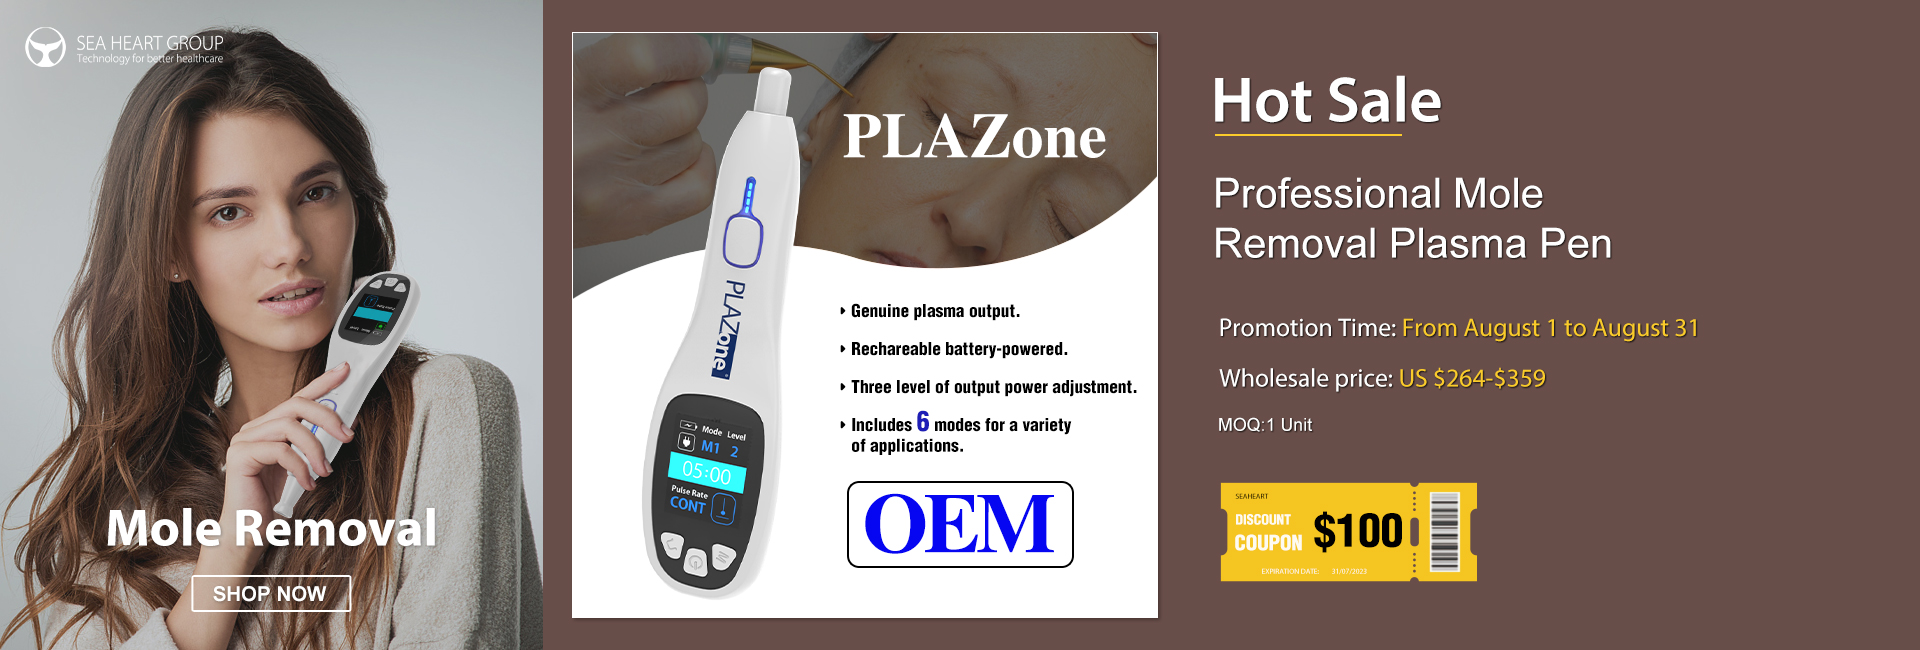 plasma pen for mole removal 